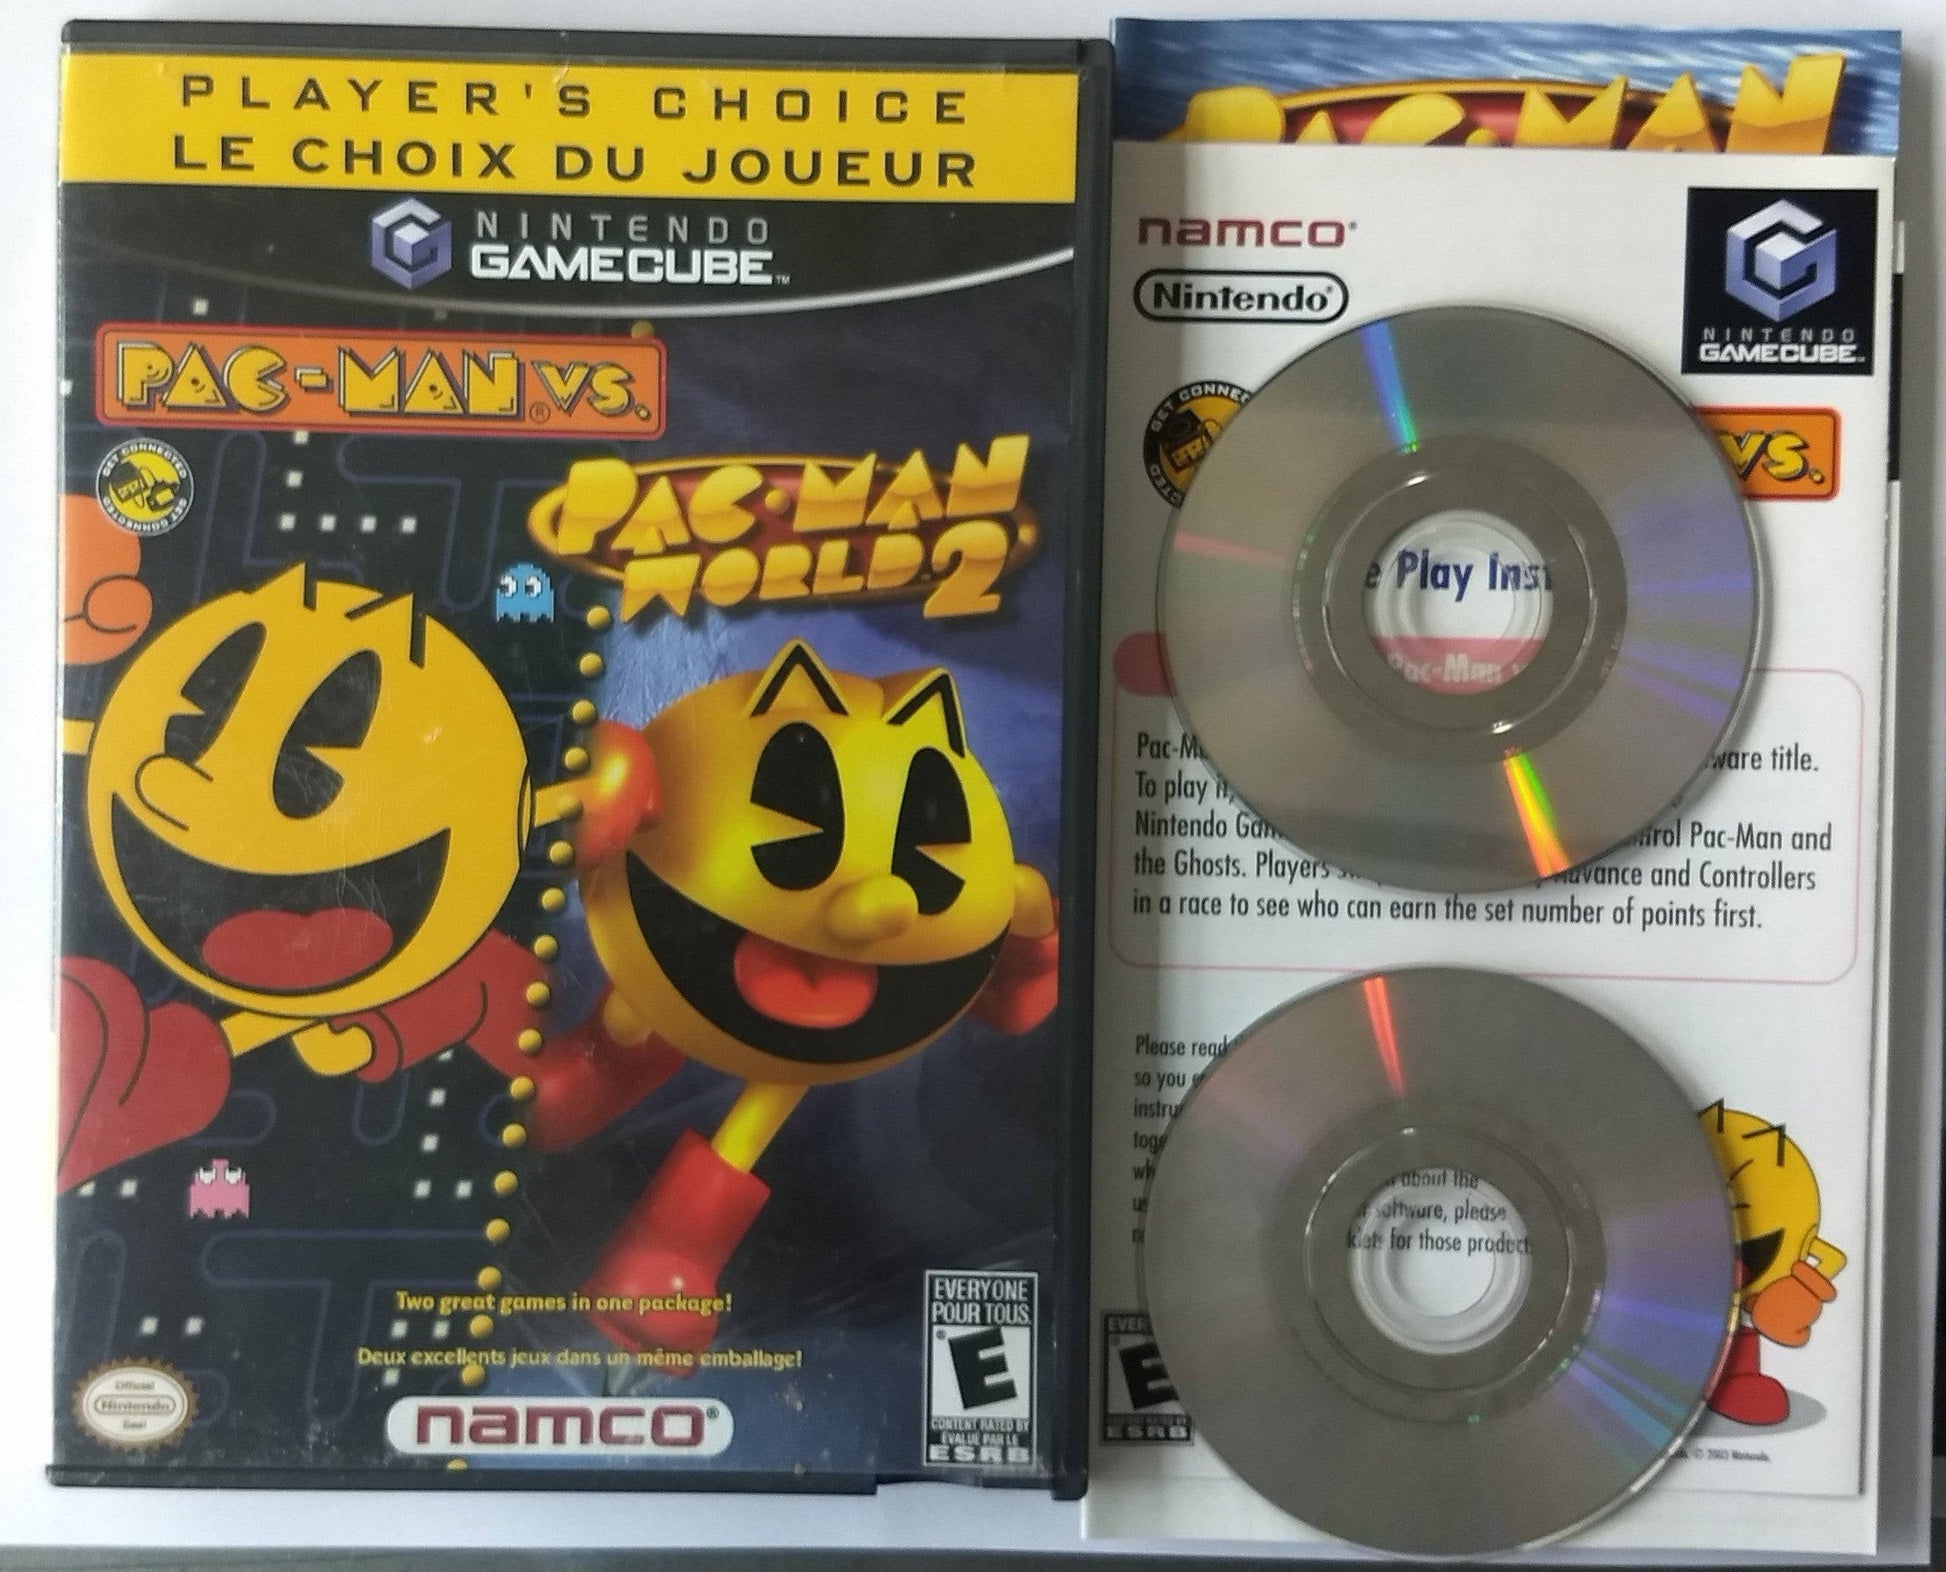 PAC-MAN VS AND PAC-MAN WORLD 2 PLAYERS CHOICE (NINTENDO GAMECUBE NGC) - jeux video game-x